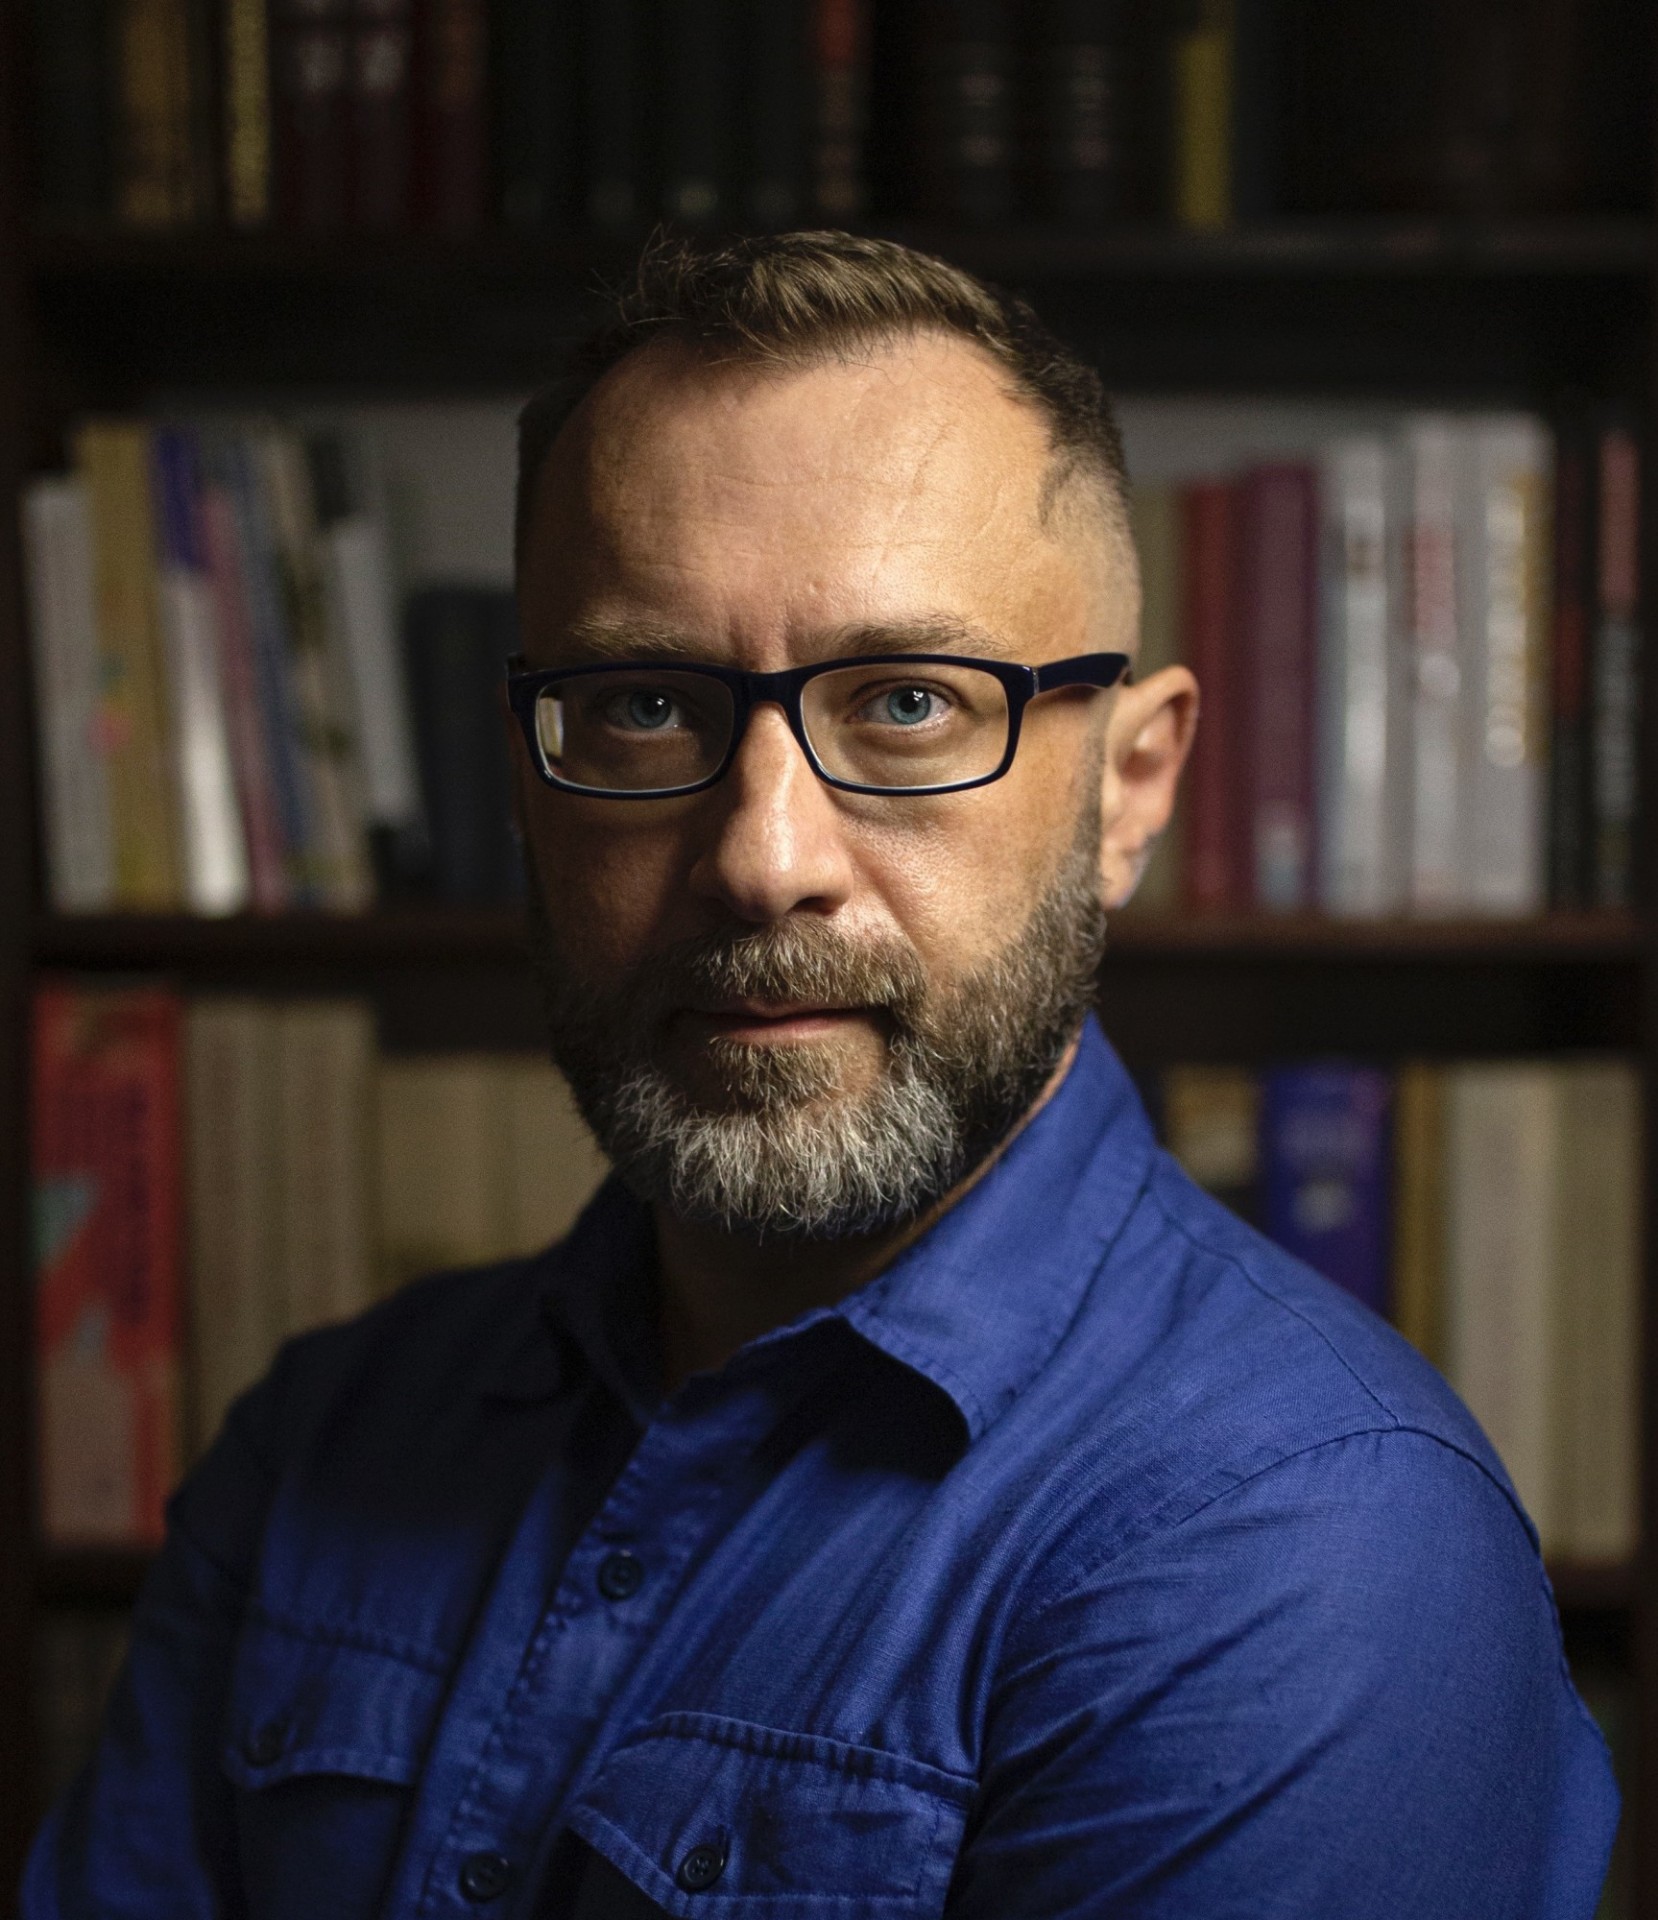 Mariusz Kozak in a blue shirt sitting in front of a bookshelf.